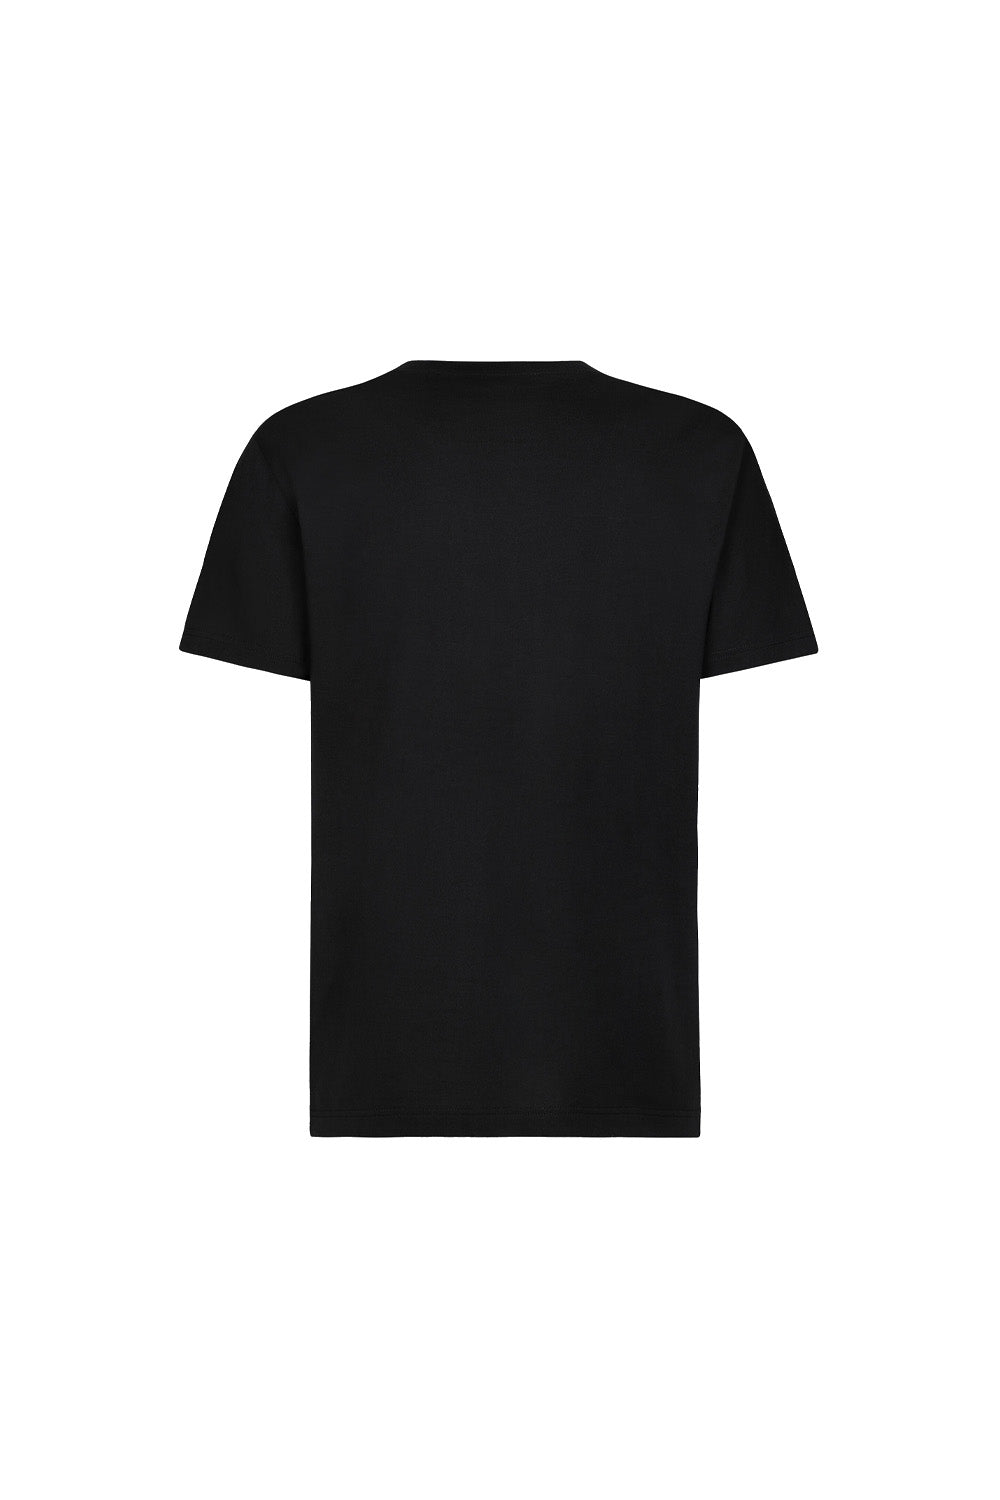 Dolce & Gabbana Short-sleeved cotton T-shirt with Marina print